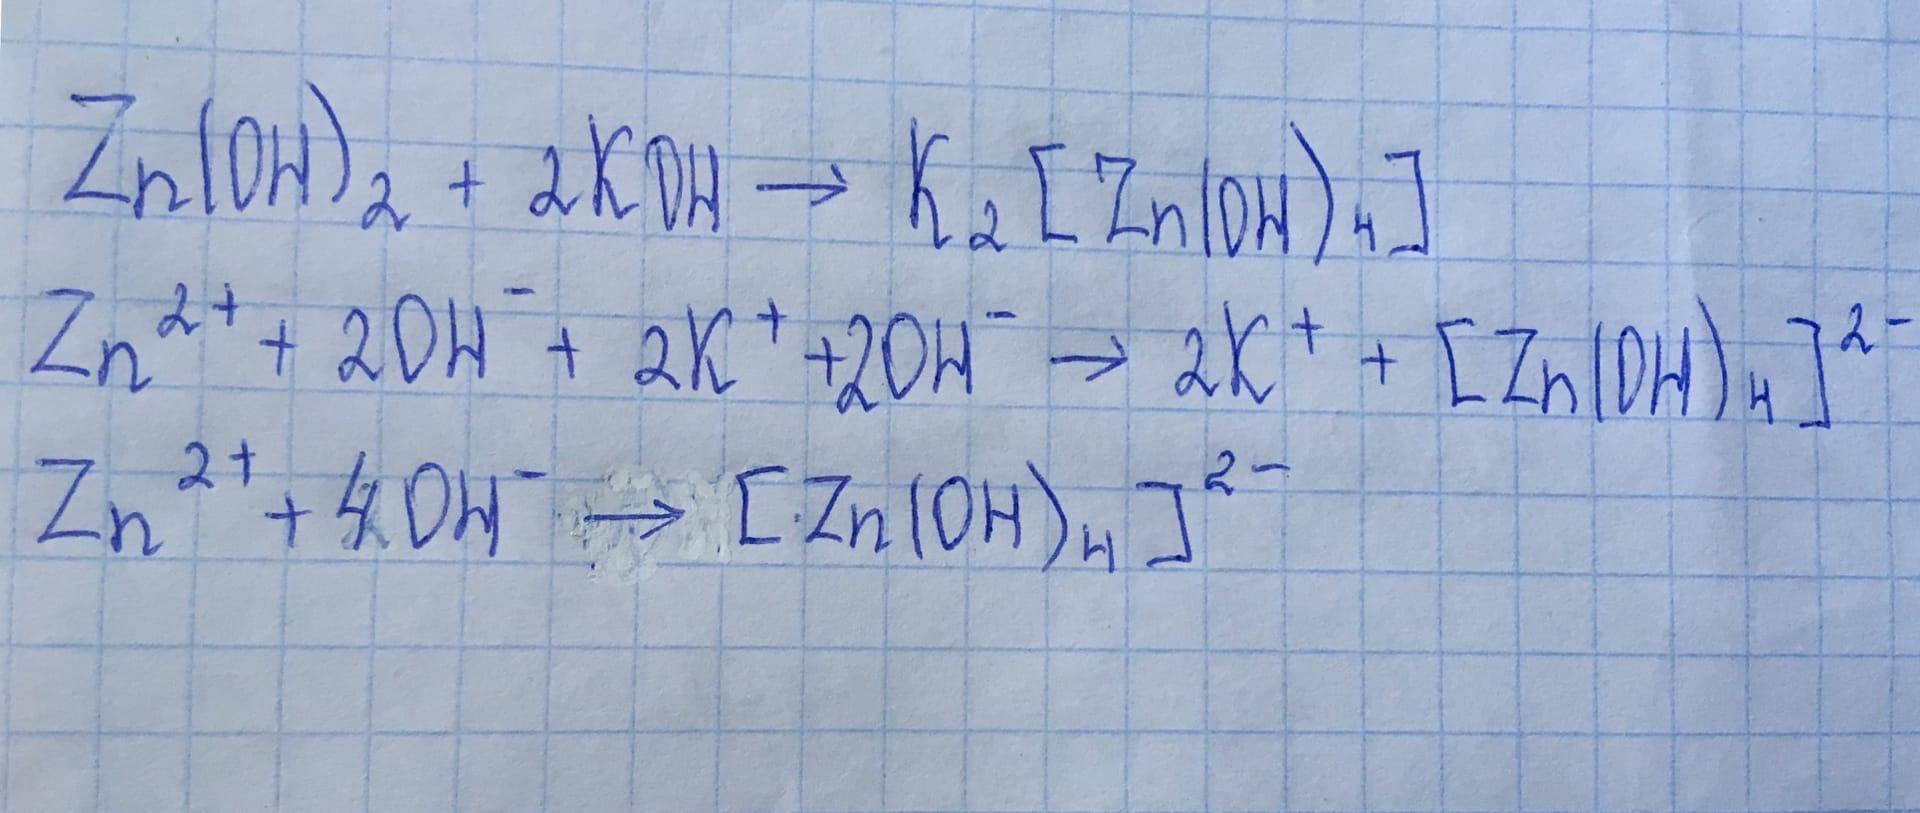 Zn oh 2 hno. ZN Oh 2 реакции. ZN Oh 2 уравнение реакции. ZN сокращенное ионное. ZN Oh 2 ионное уравнение.